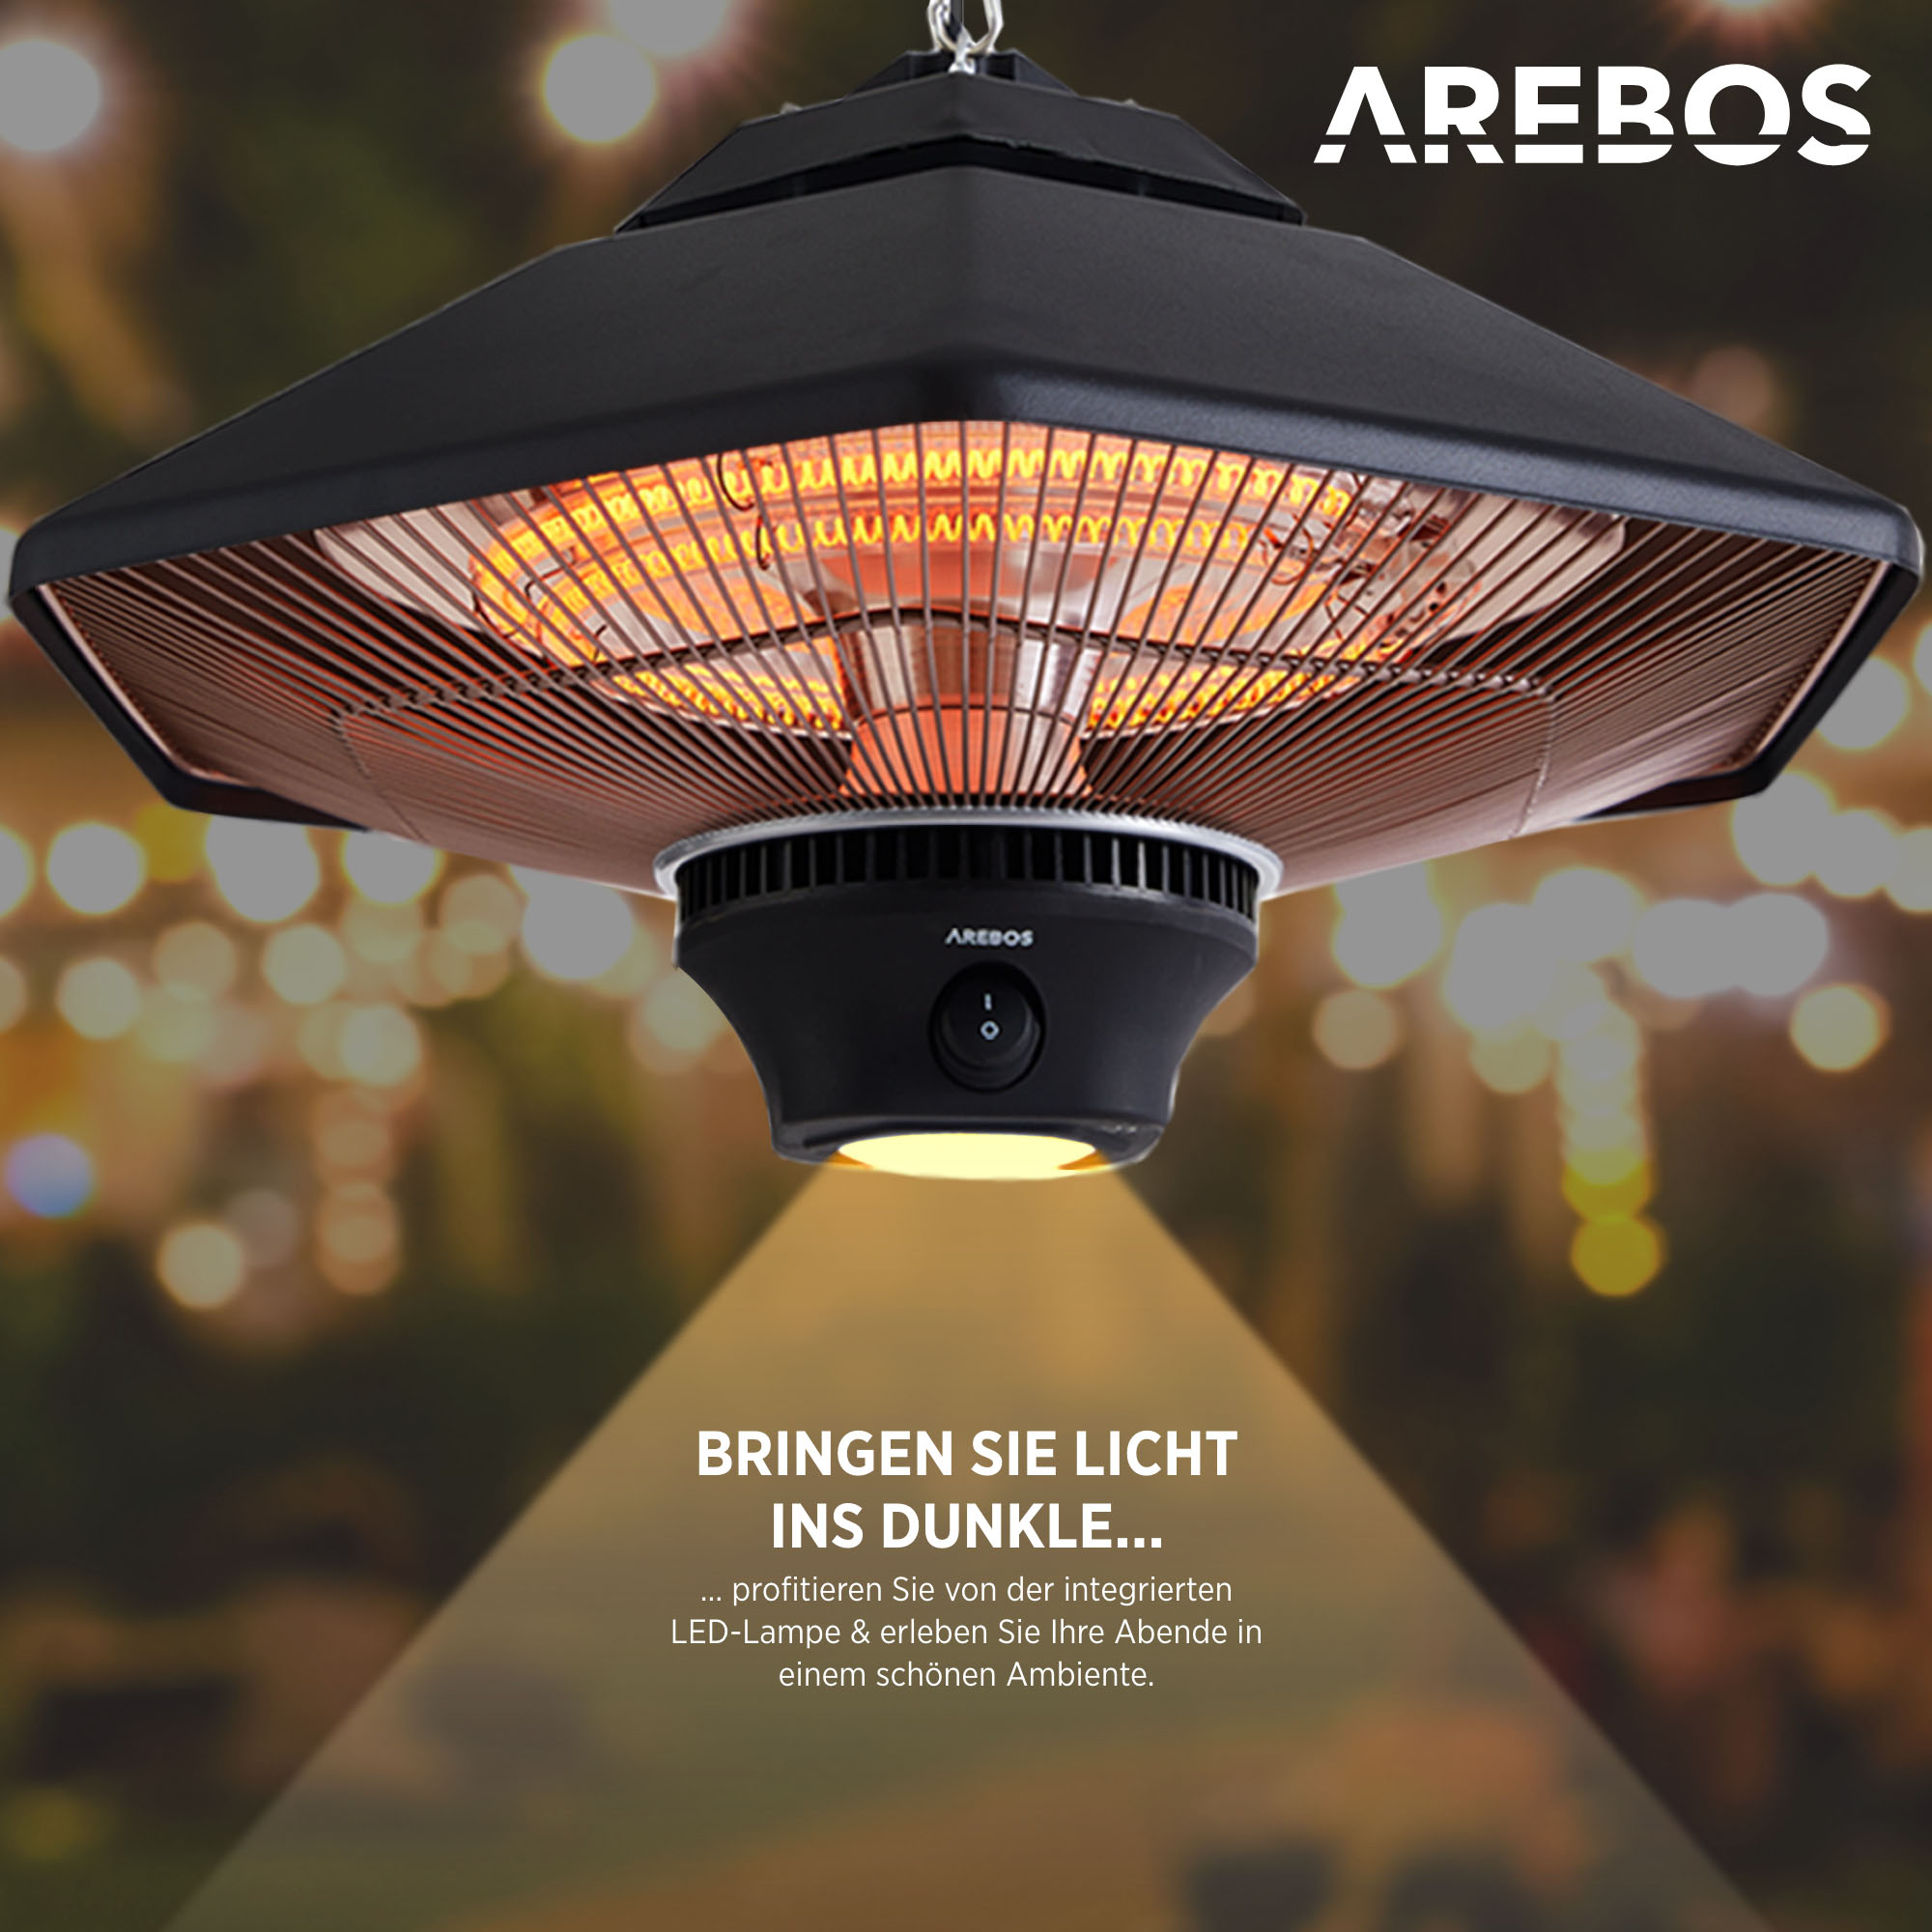 Hexa + Fernbedienung | hexagonal LED-Lampe Deckenheizstrahler (2000 Watt) AREBOS